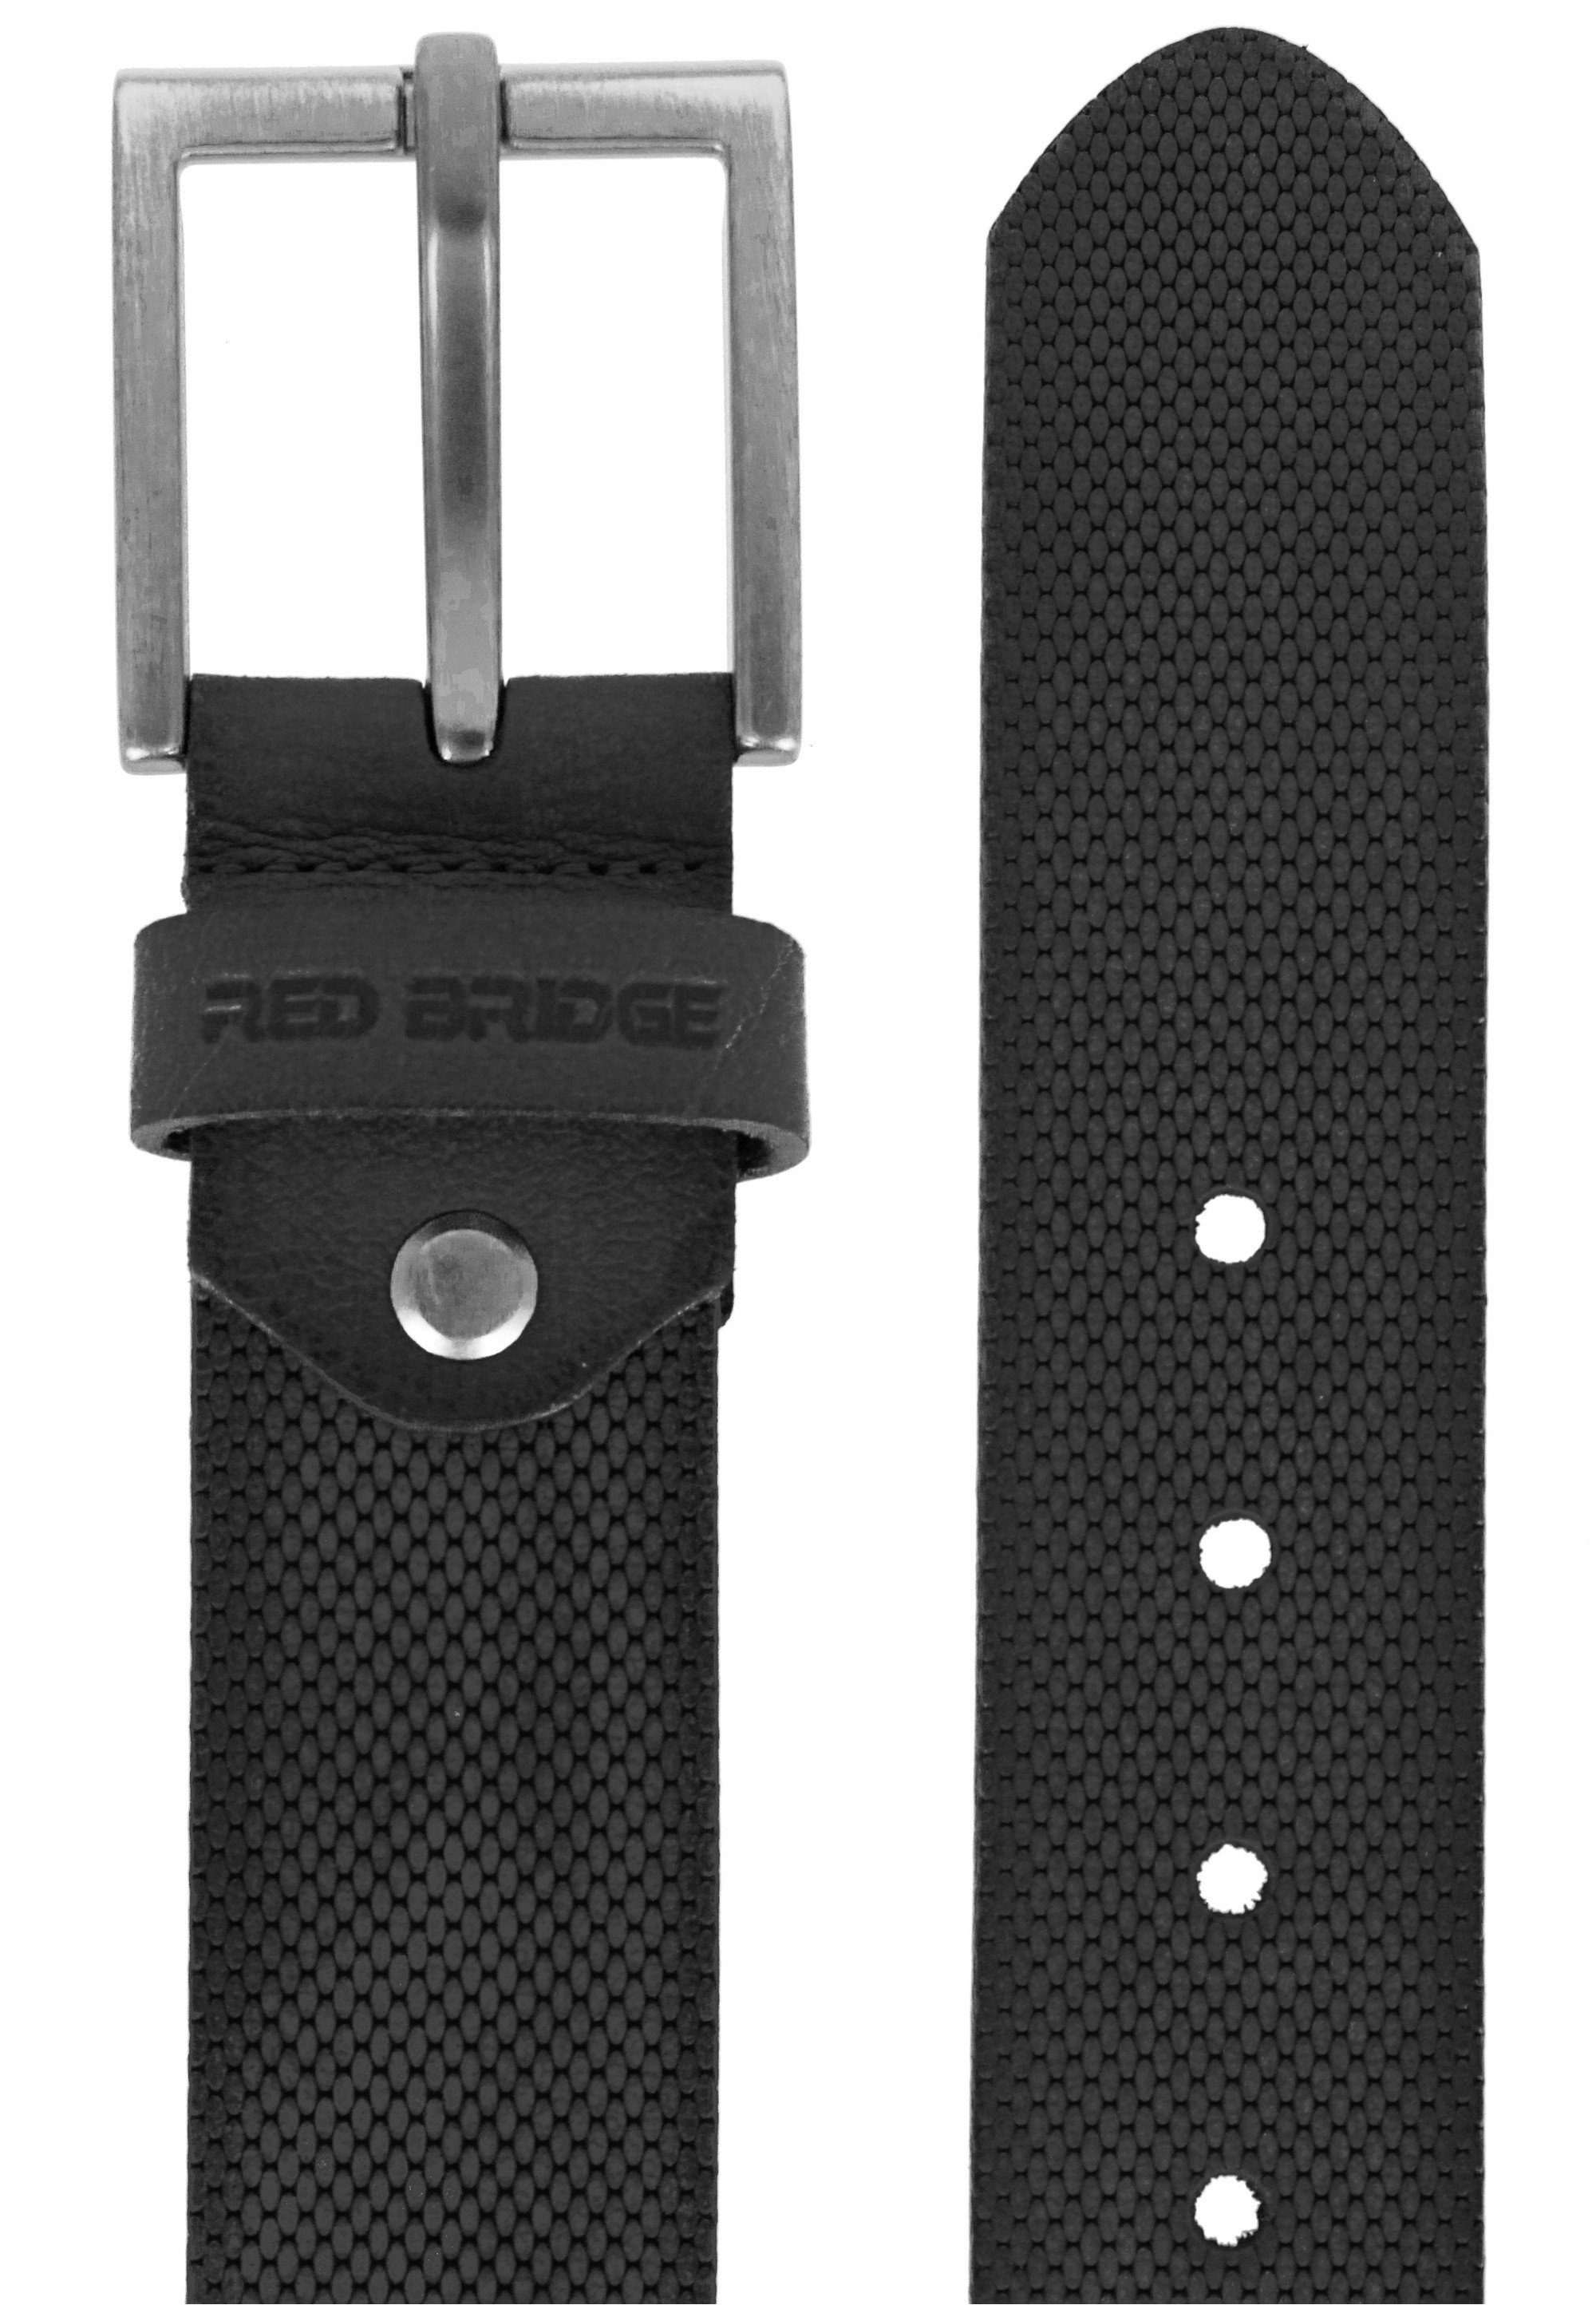 Design in schlichtem RedBridge Ledergürtel Frisco schwarz